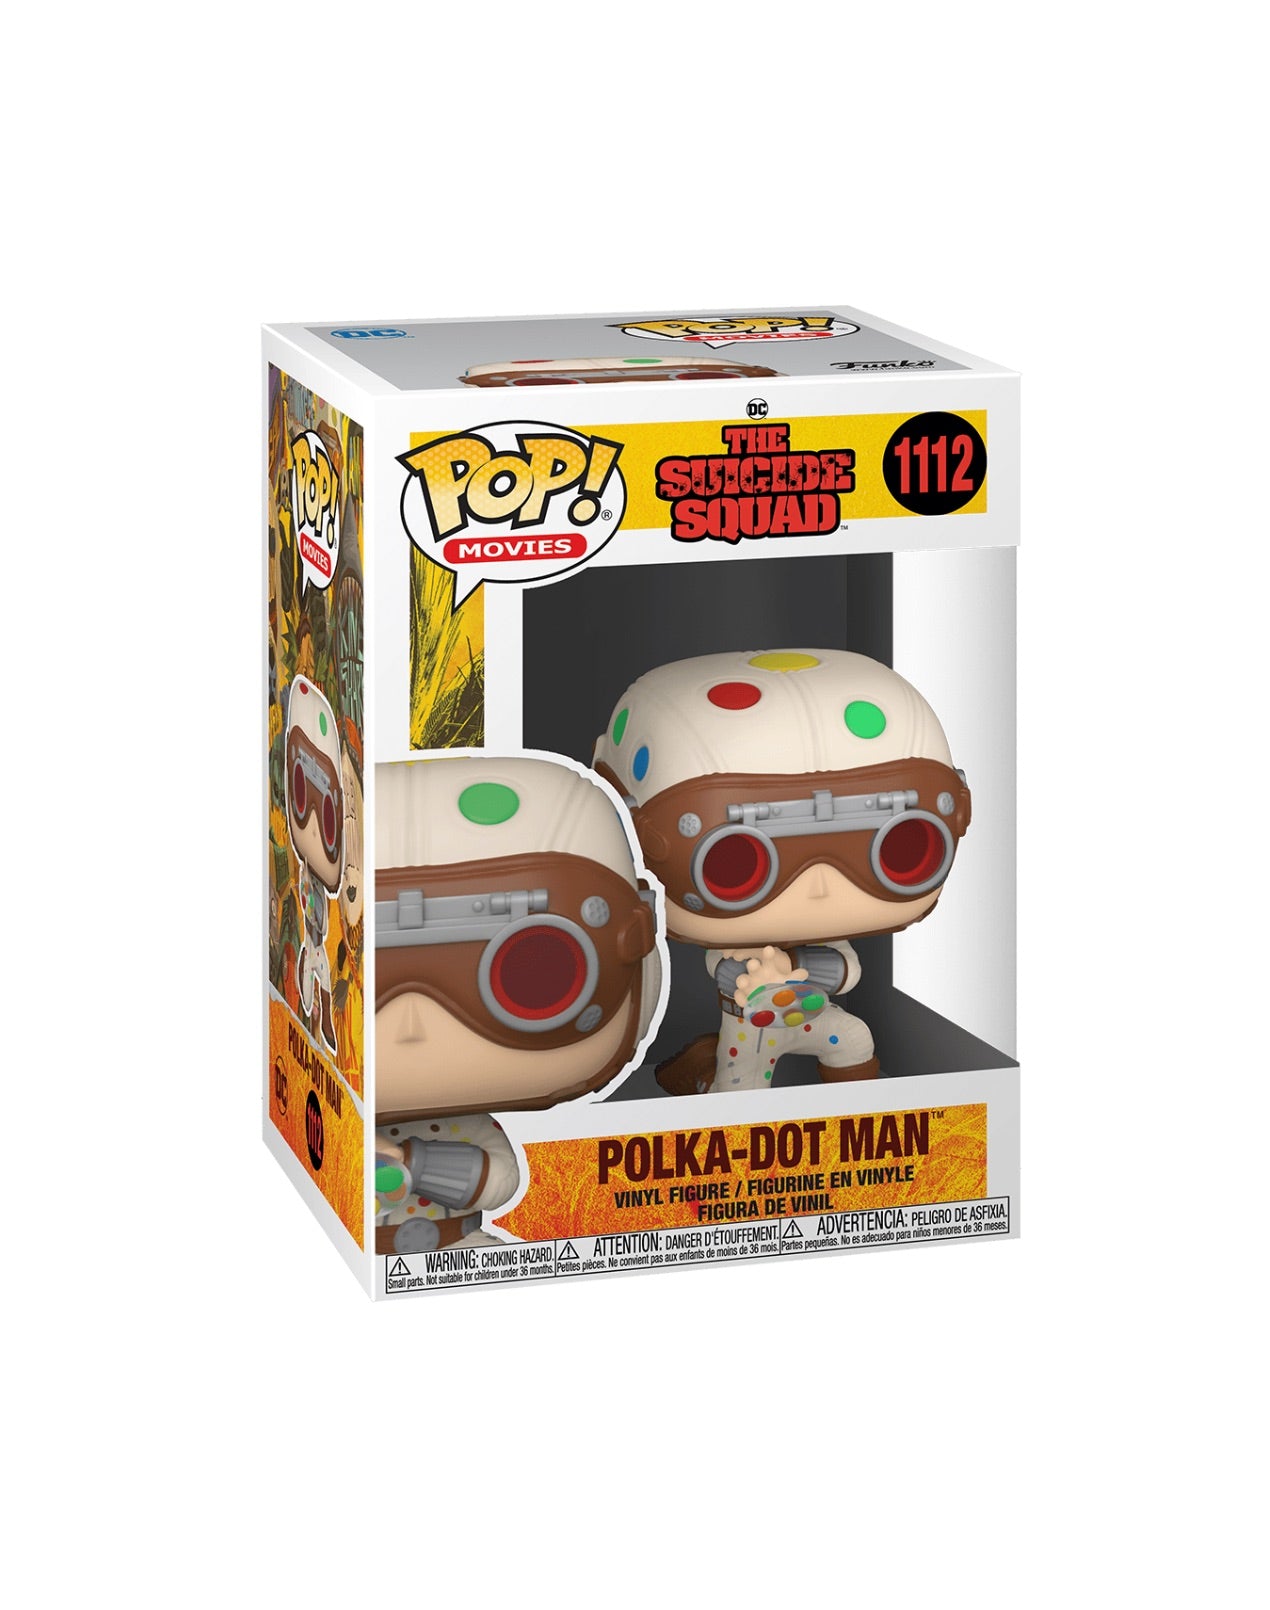 POP! Movies Suicide Squad Polka-Dot Man #1112